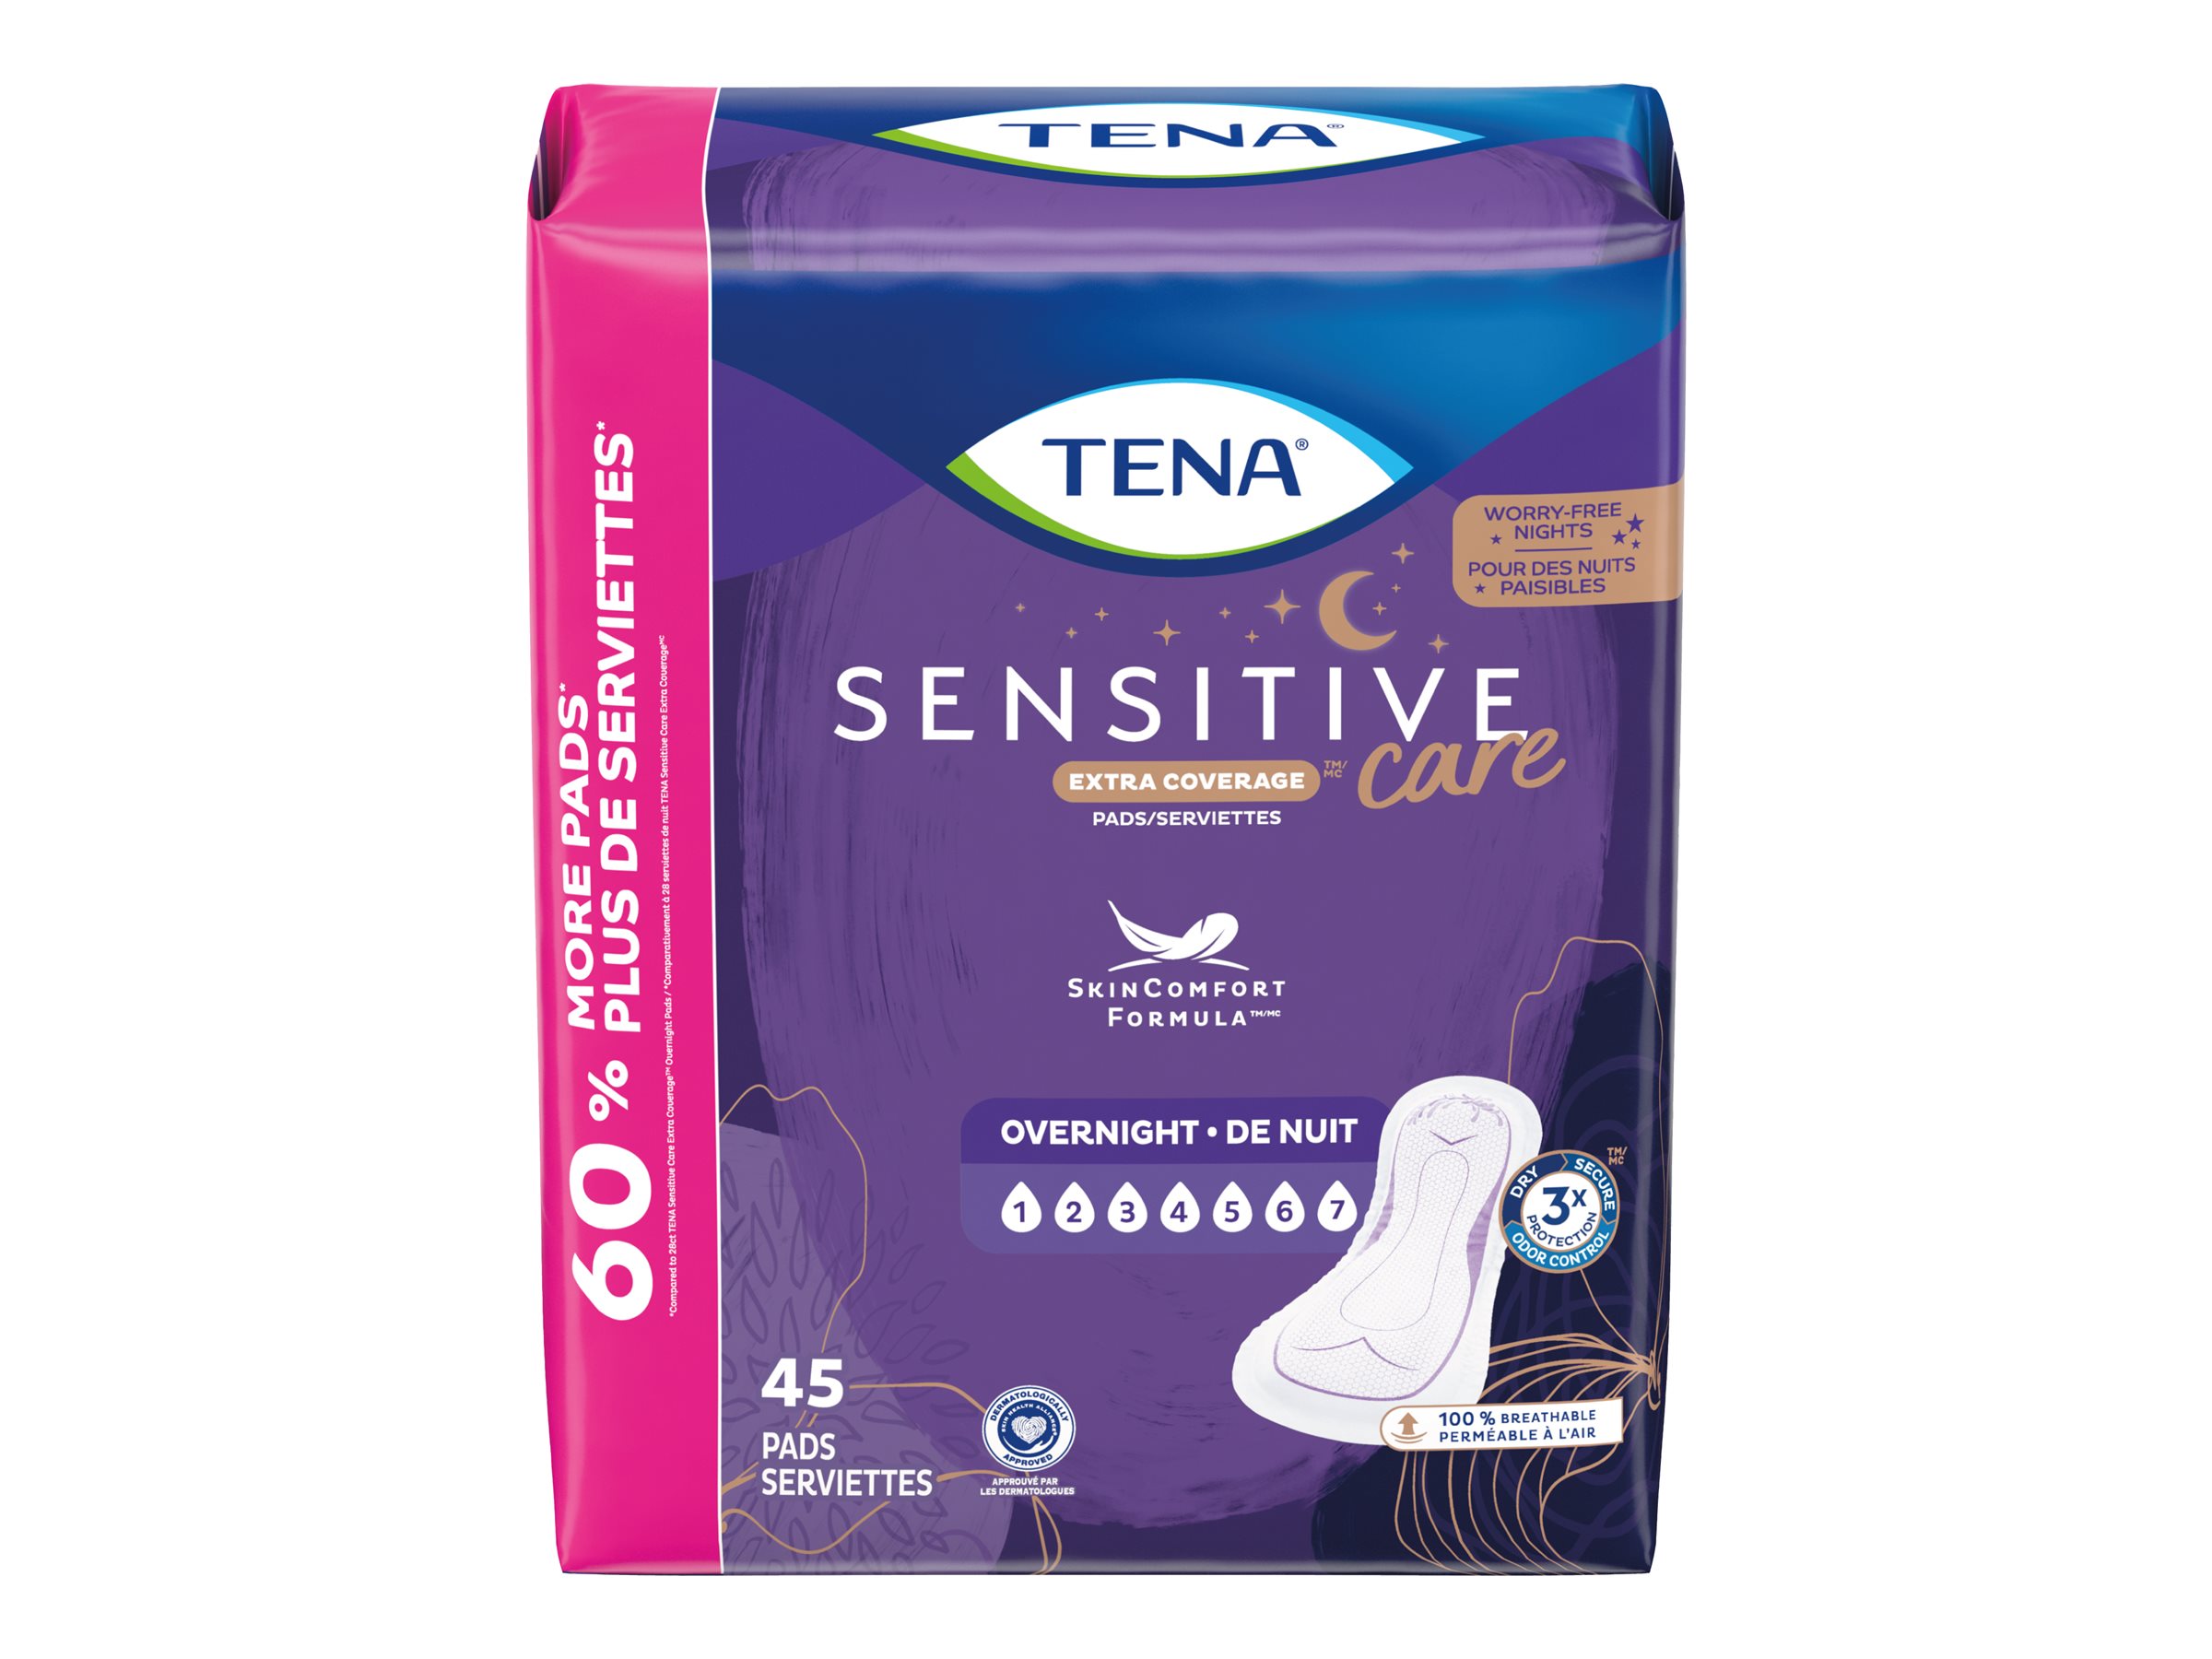 Tena Sensitive Care Extra Coverage Overnight Sanitary Pads - 45's